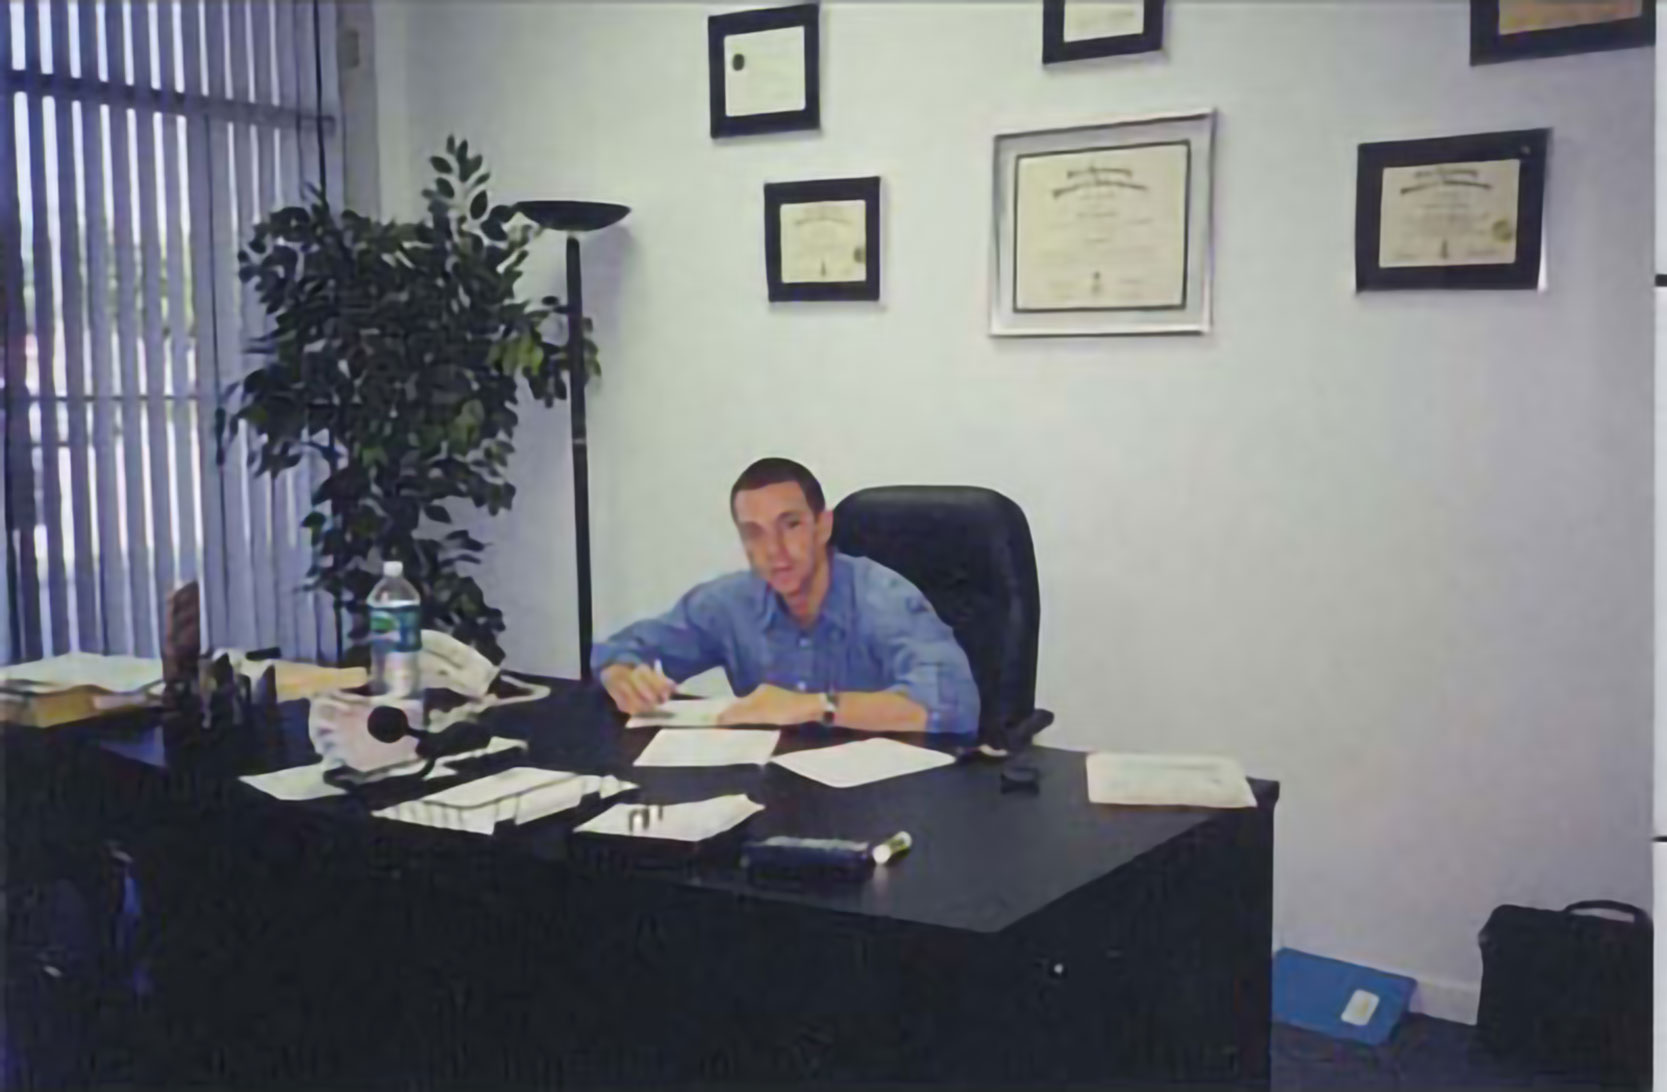 Michael Scholz at his desk